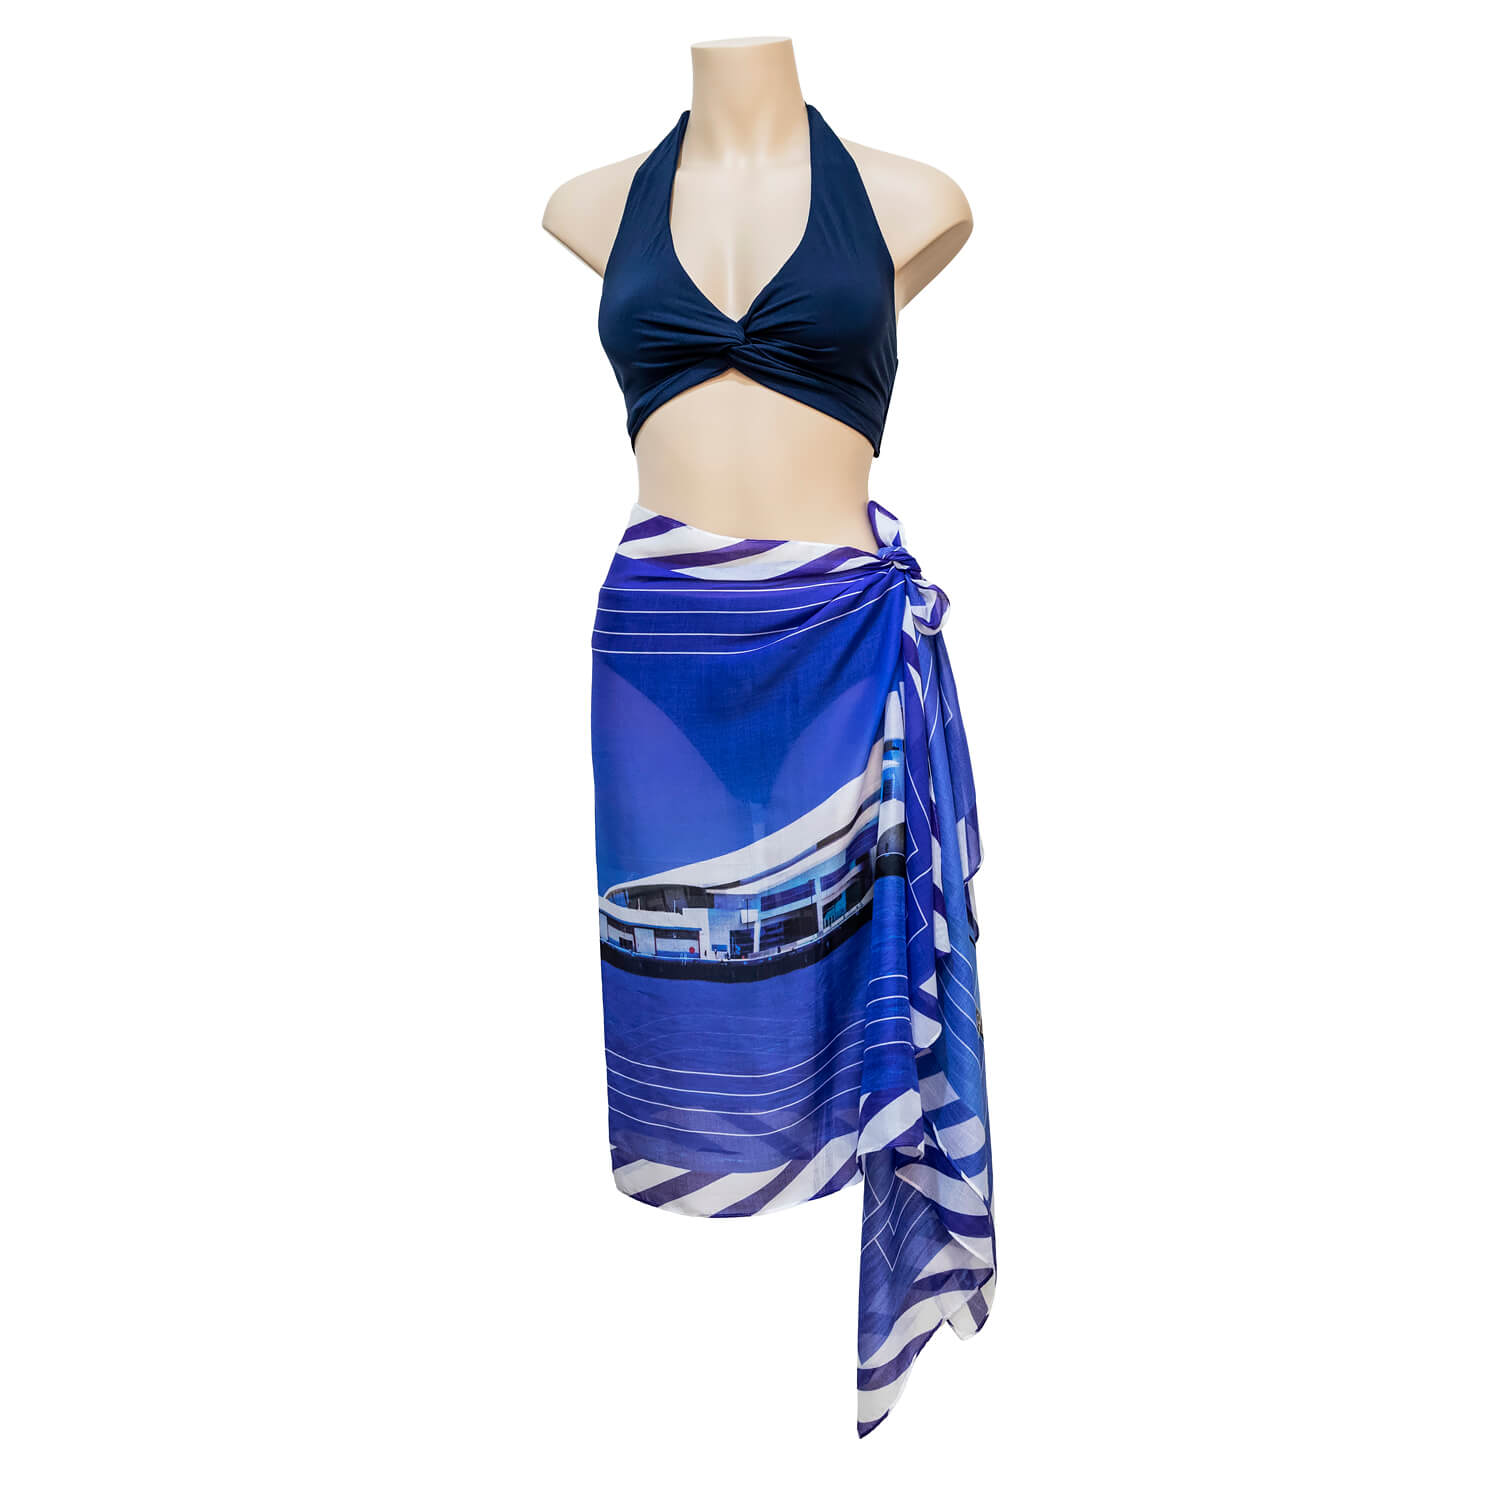 maritime blue scarf by seahorse silks worn as sarong around hips